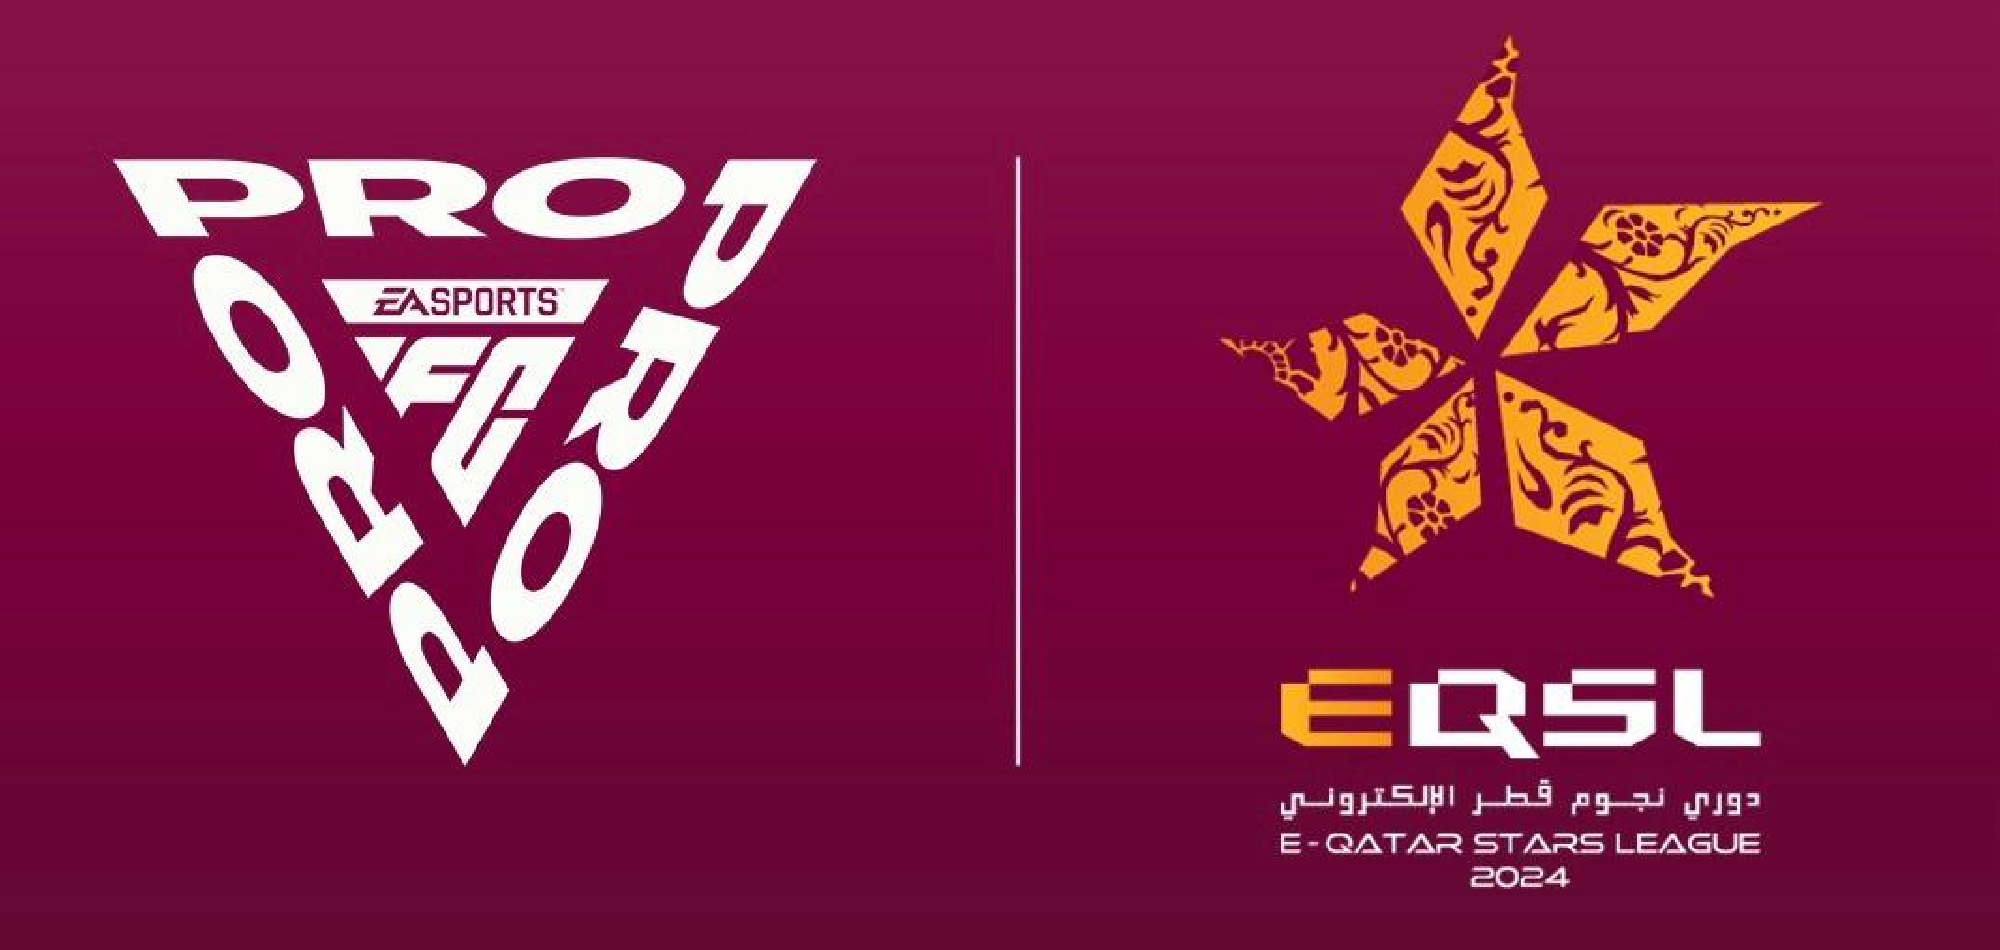 Electronic Qatar Stars League 2024 all set to start